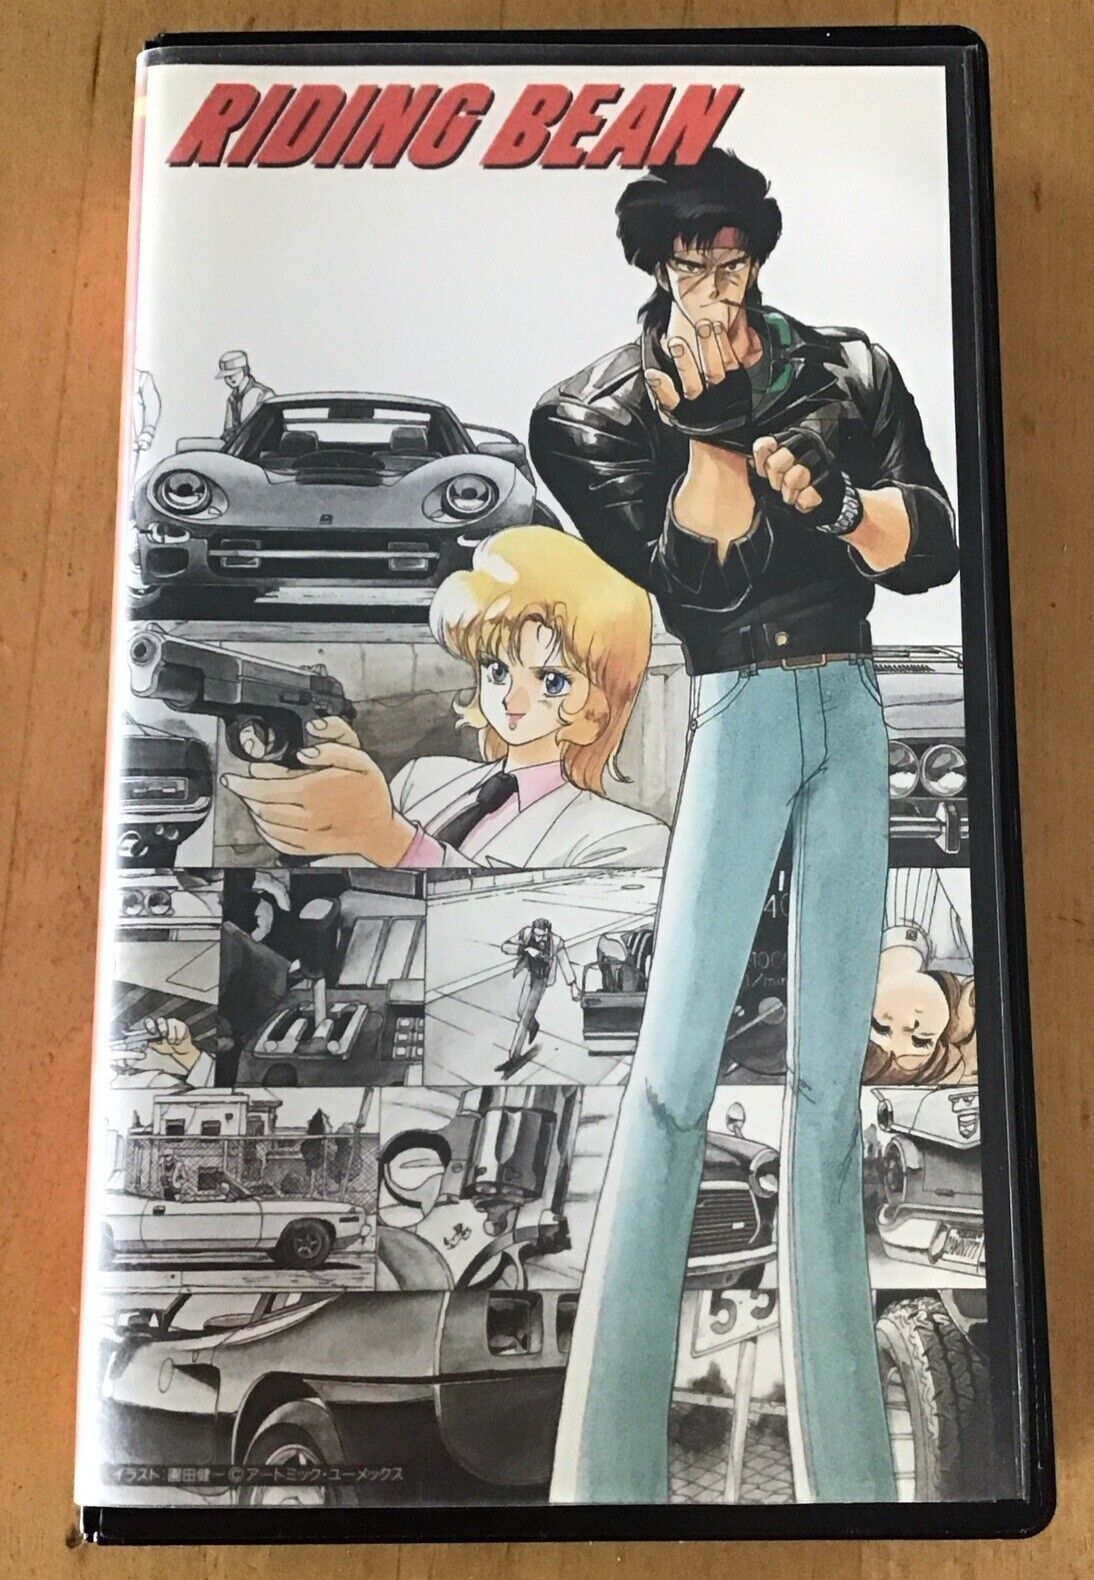 Riding Bean Gunsmith Cats Anime 1990 Original Japanese VHS With Insert